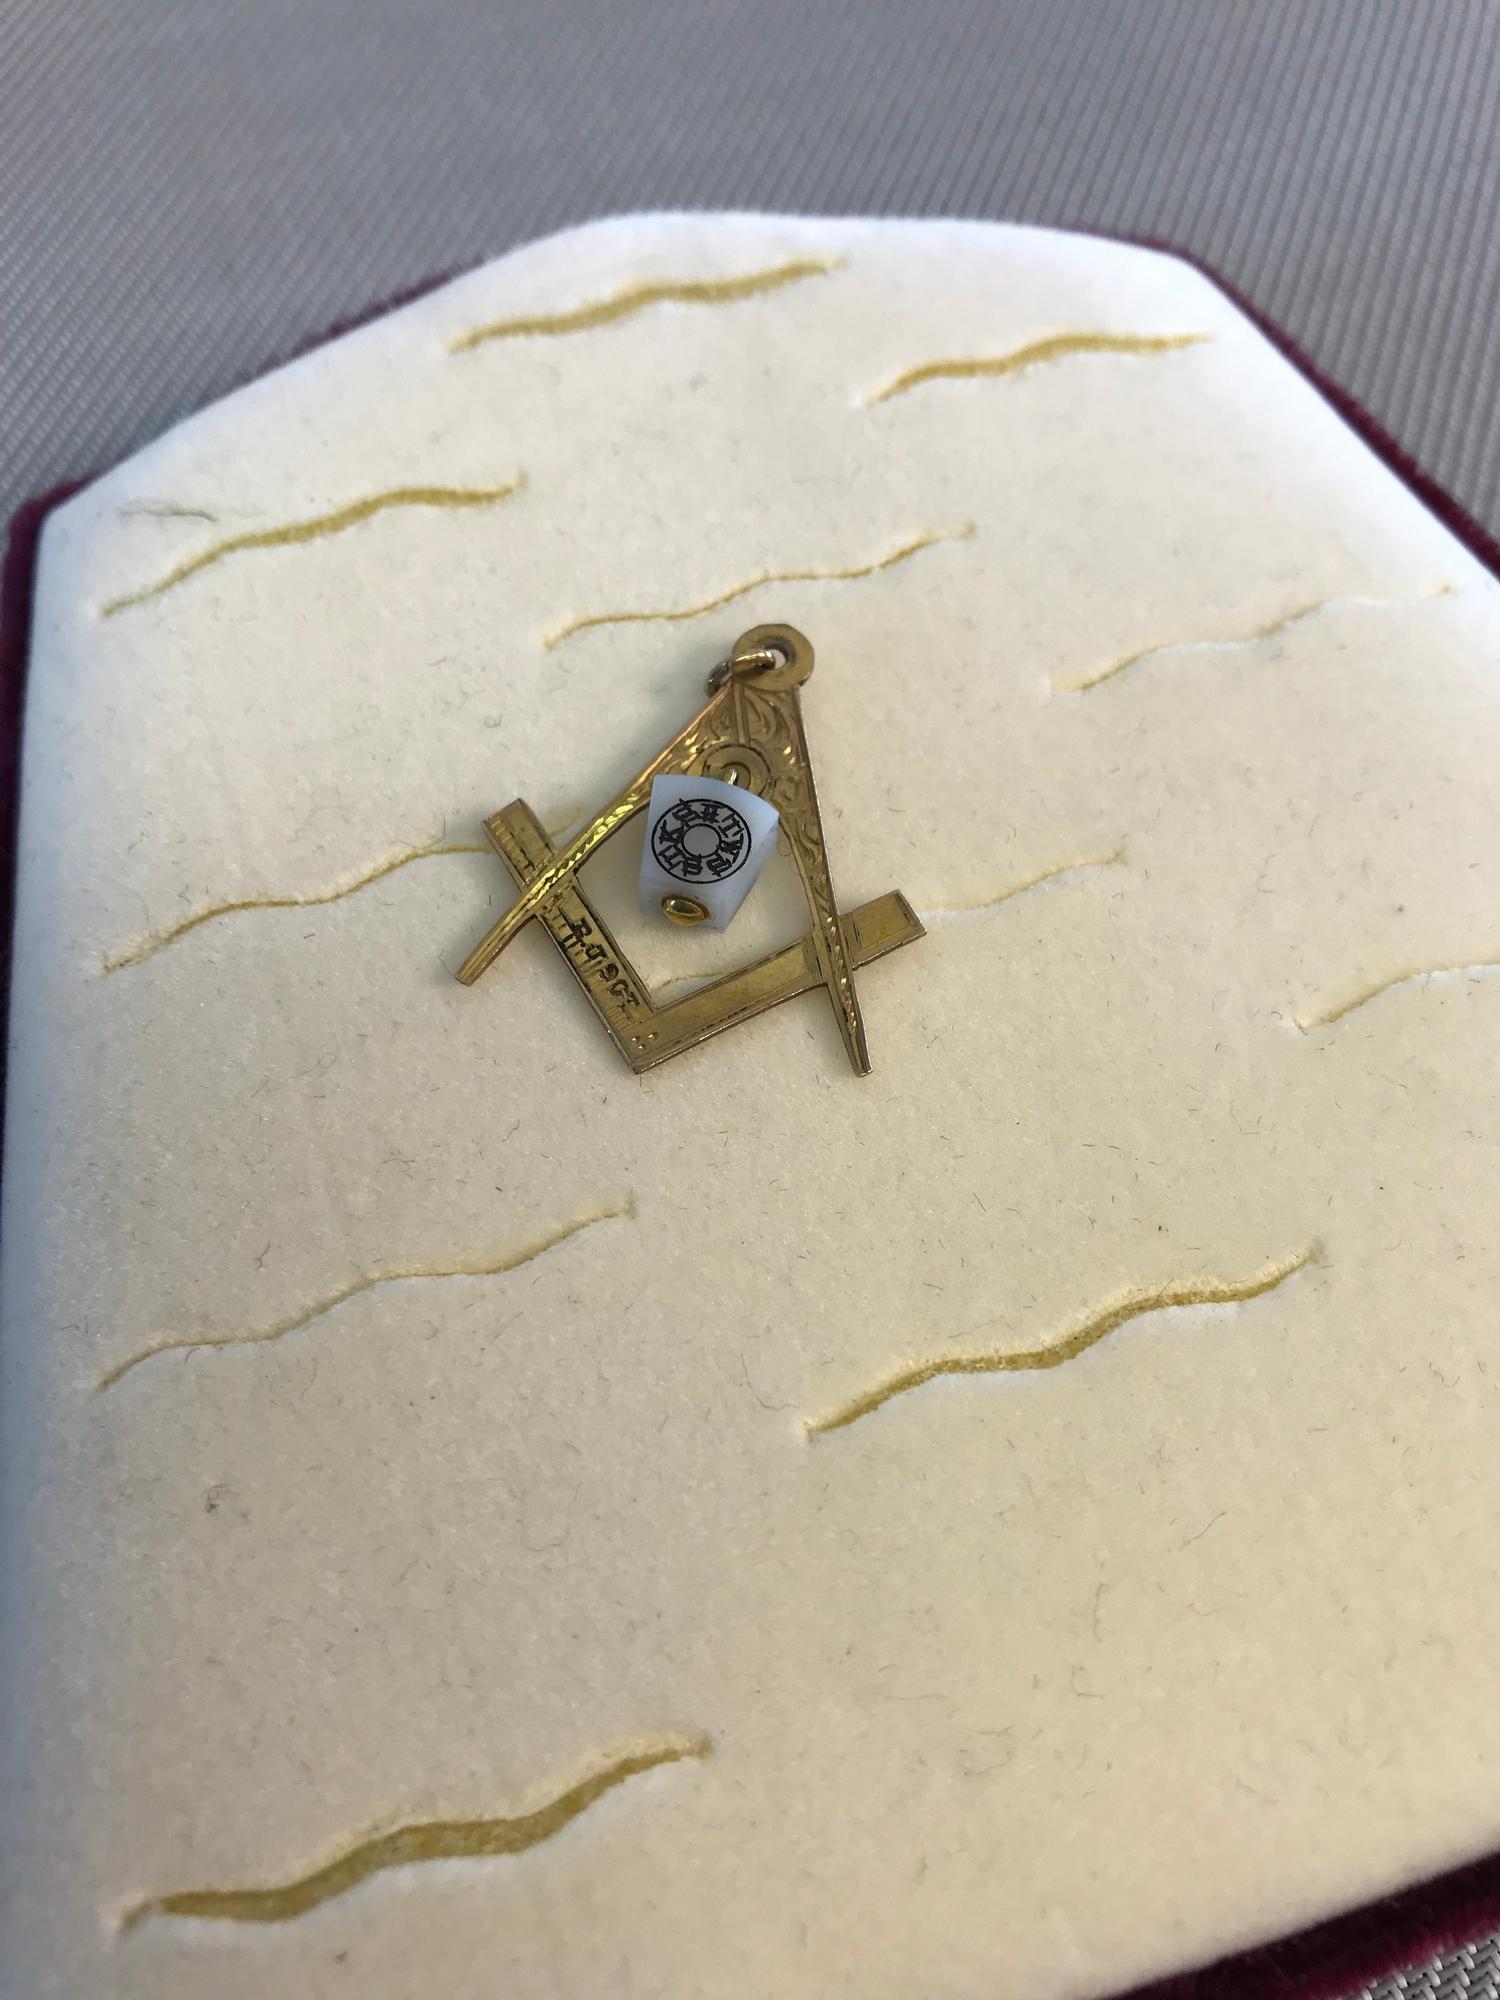 9ct gold masonic pendant